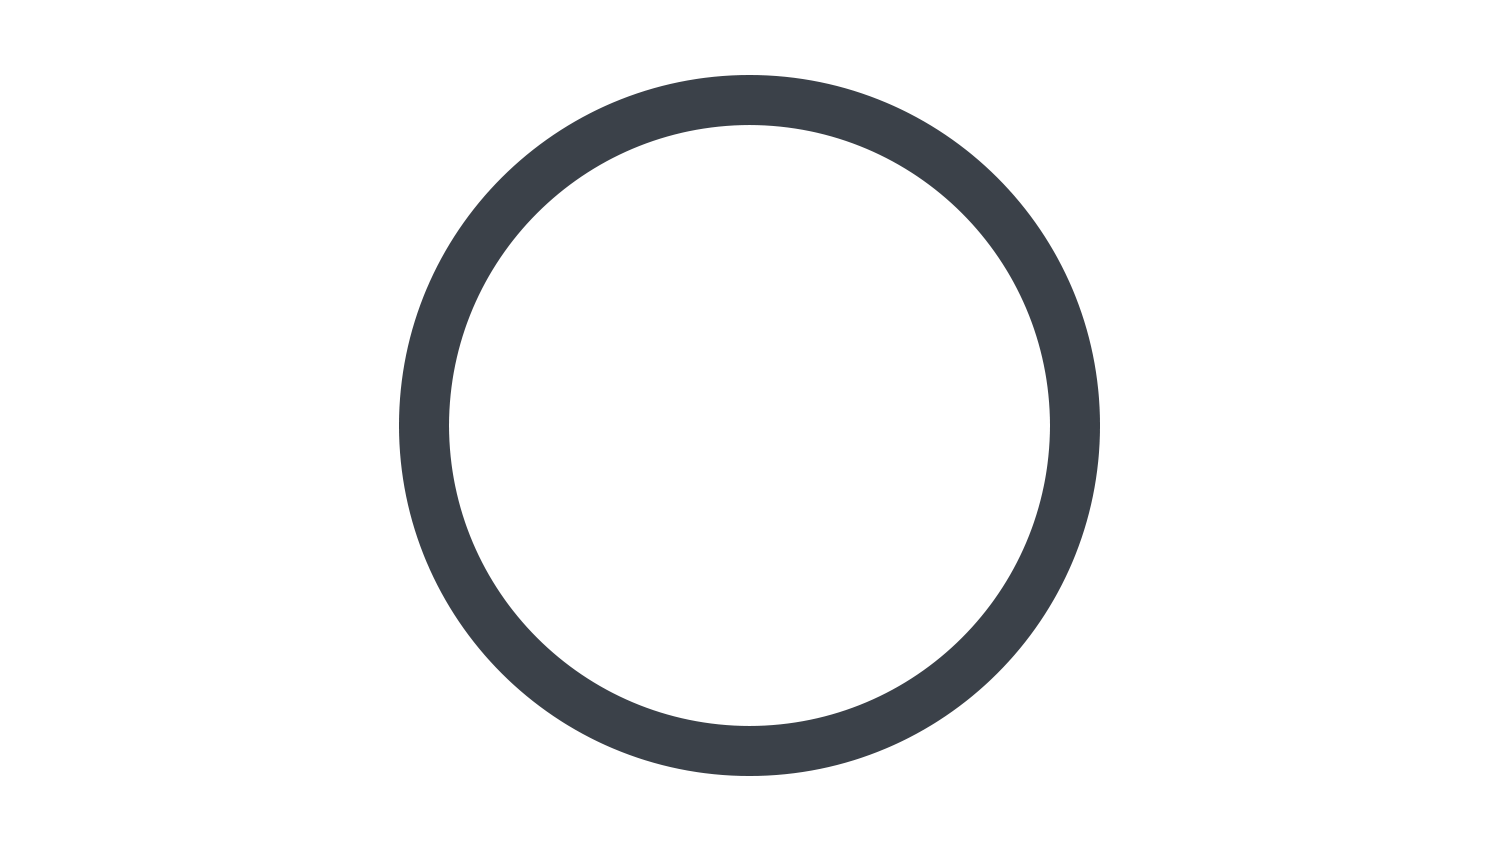 Vectorworksで円を描く方法